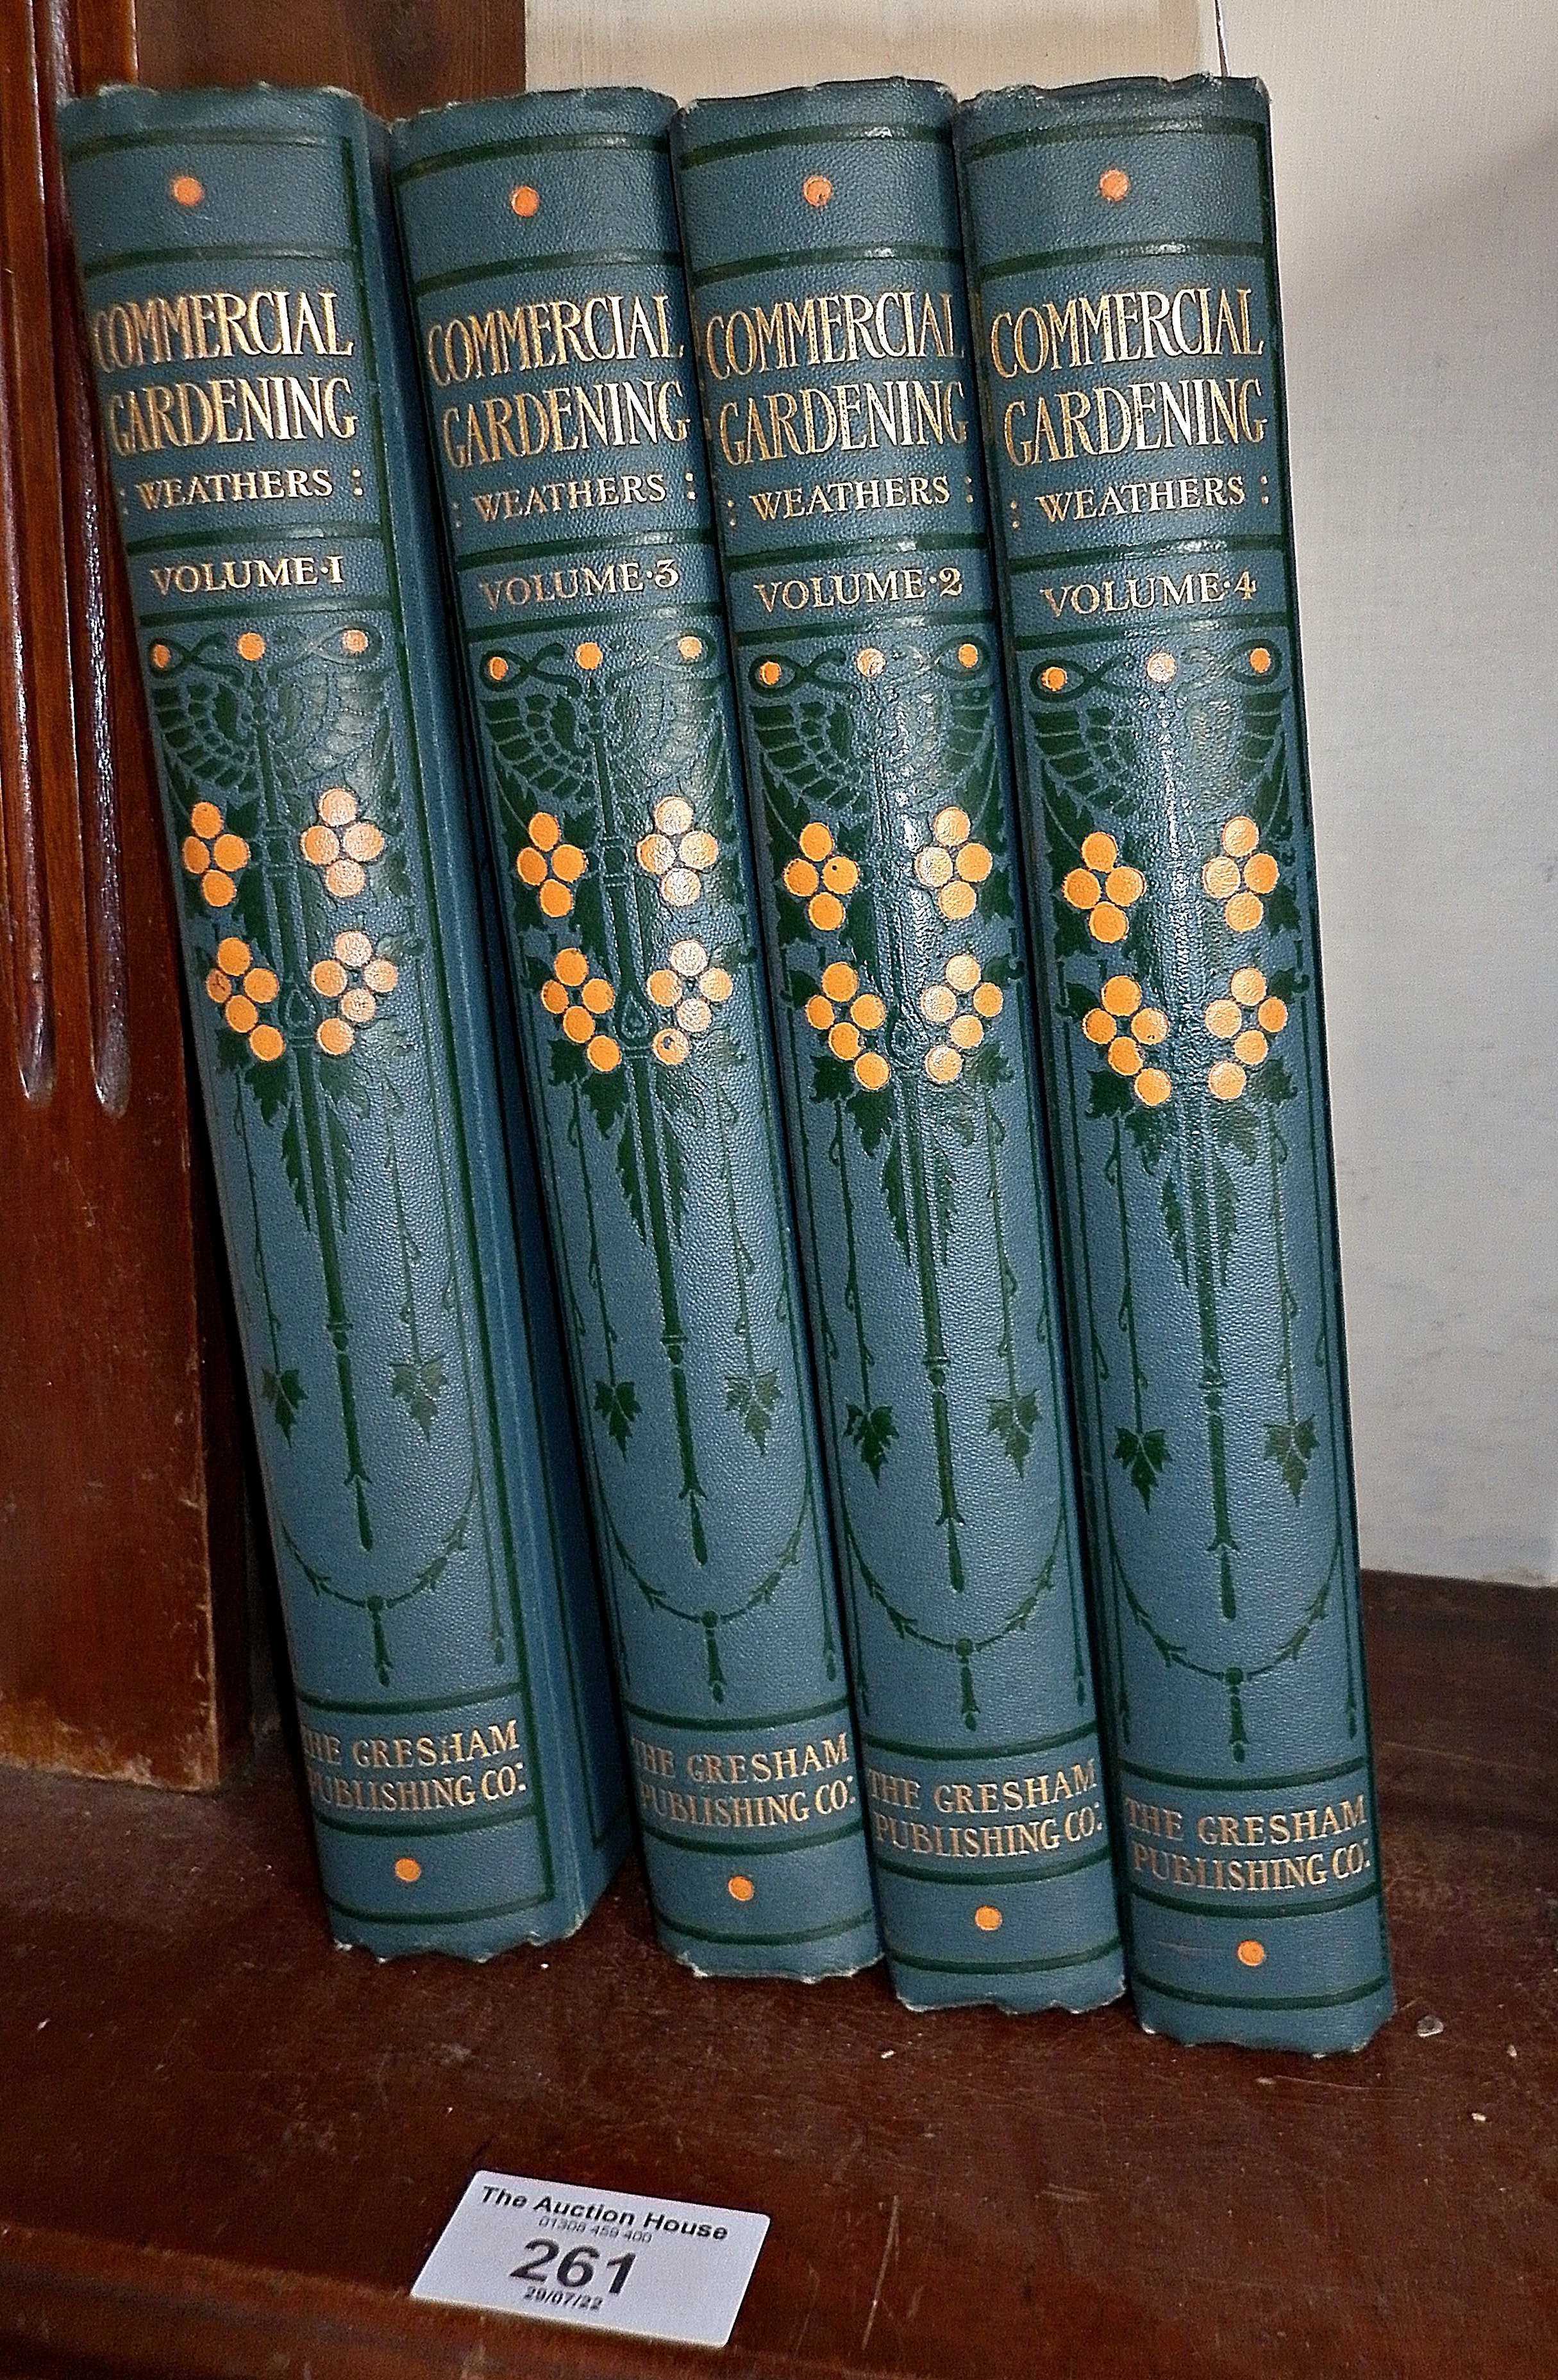 Commercial Gardening edited by John Weathers, 1913, four volumes, pub. The Gresham Publishing